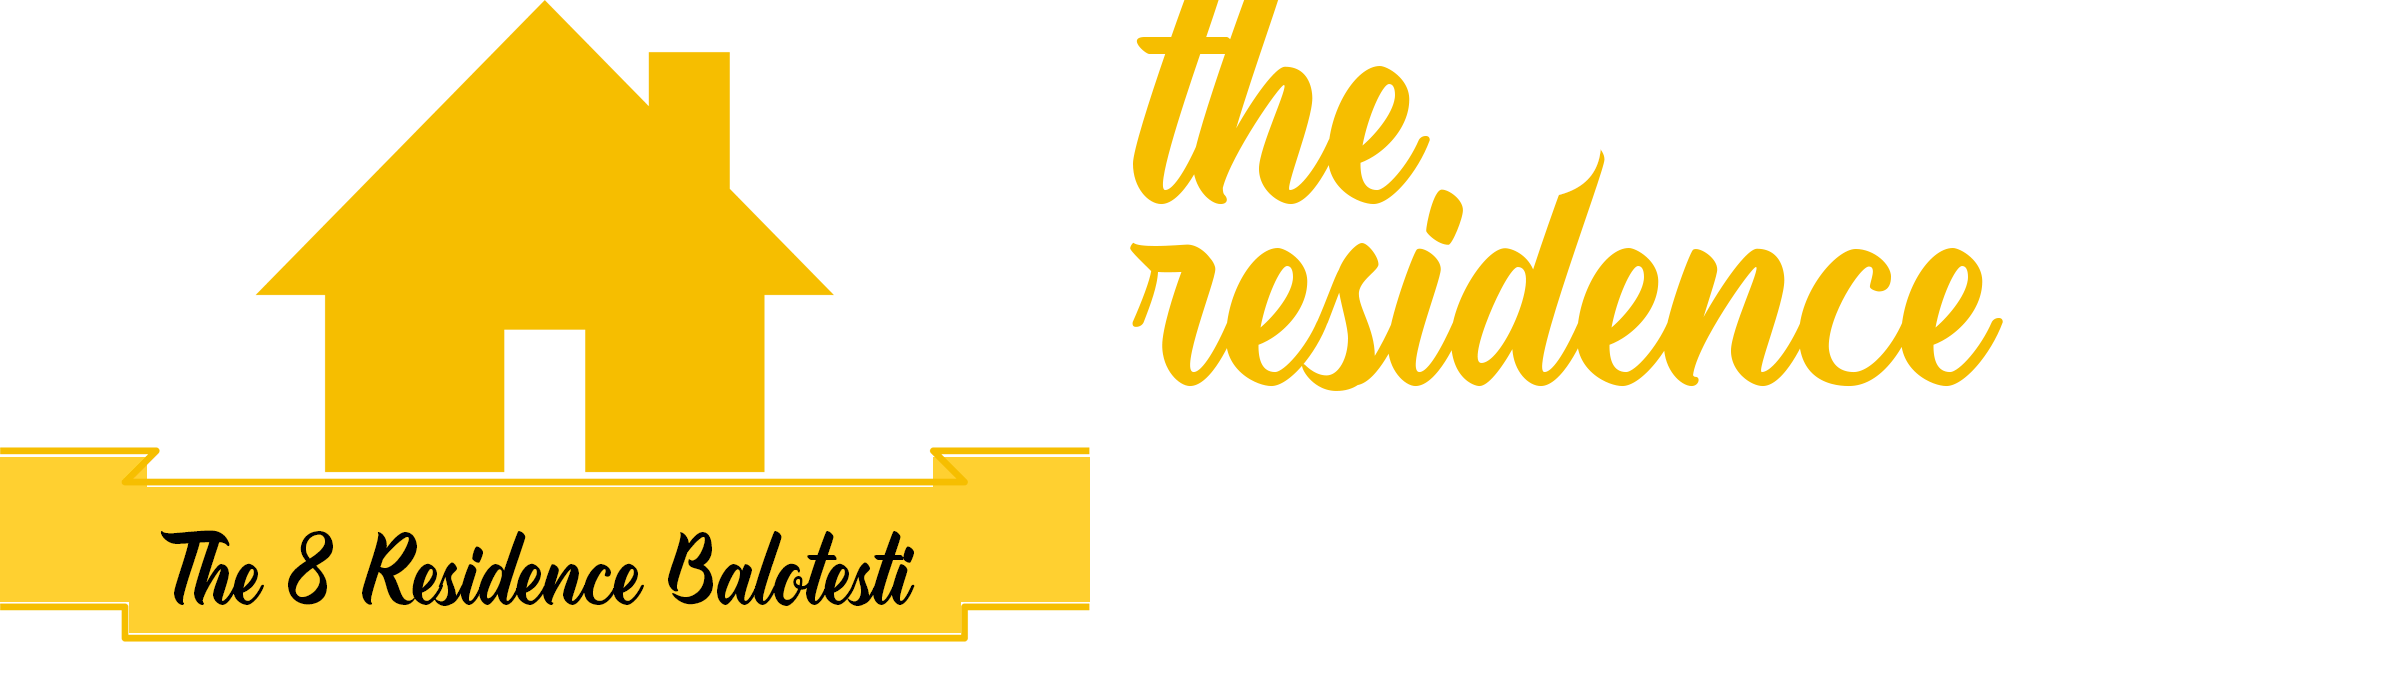 The 8 Residence Balotești